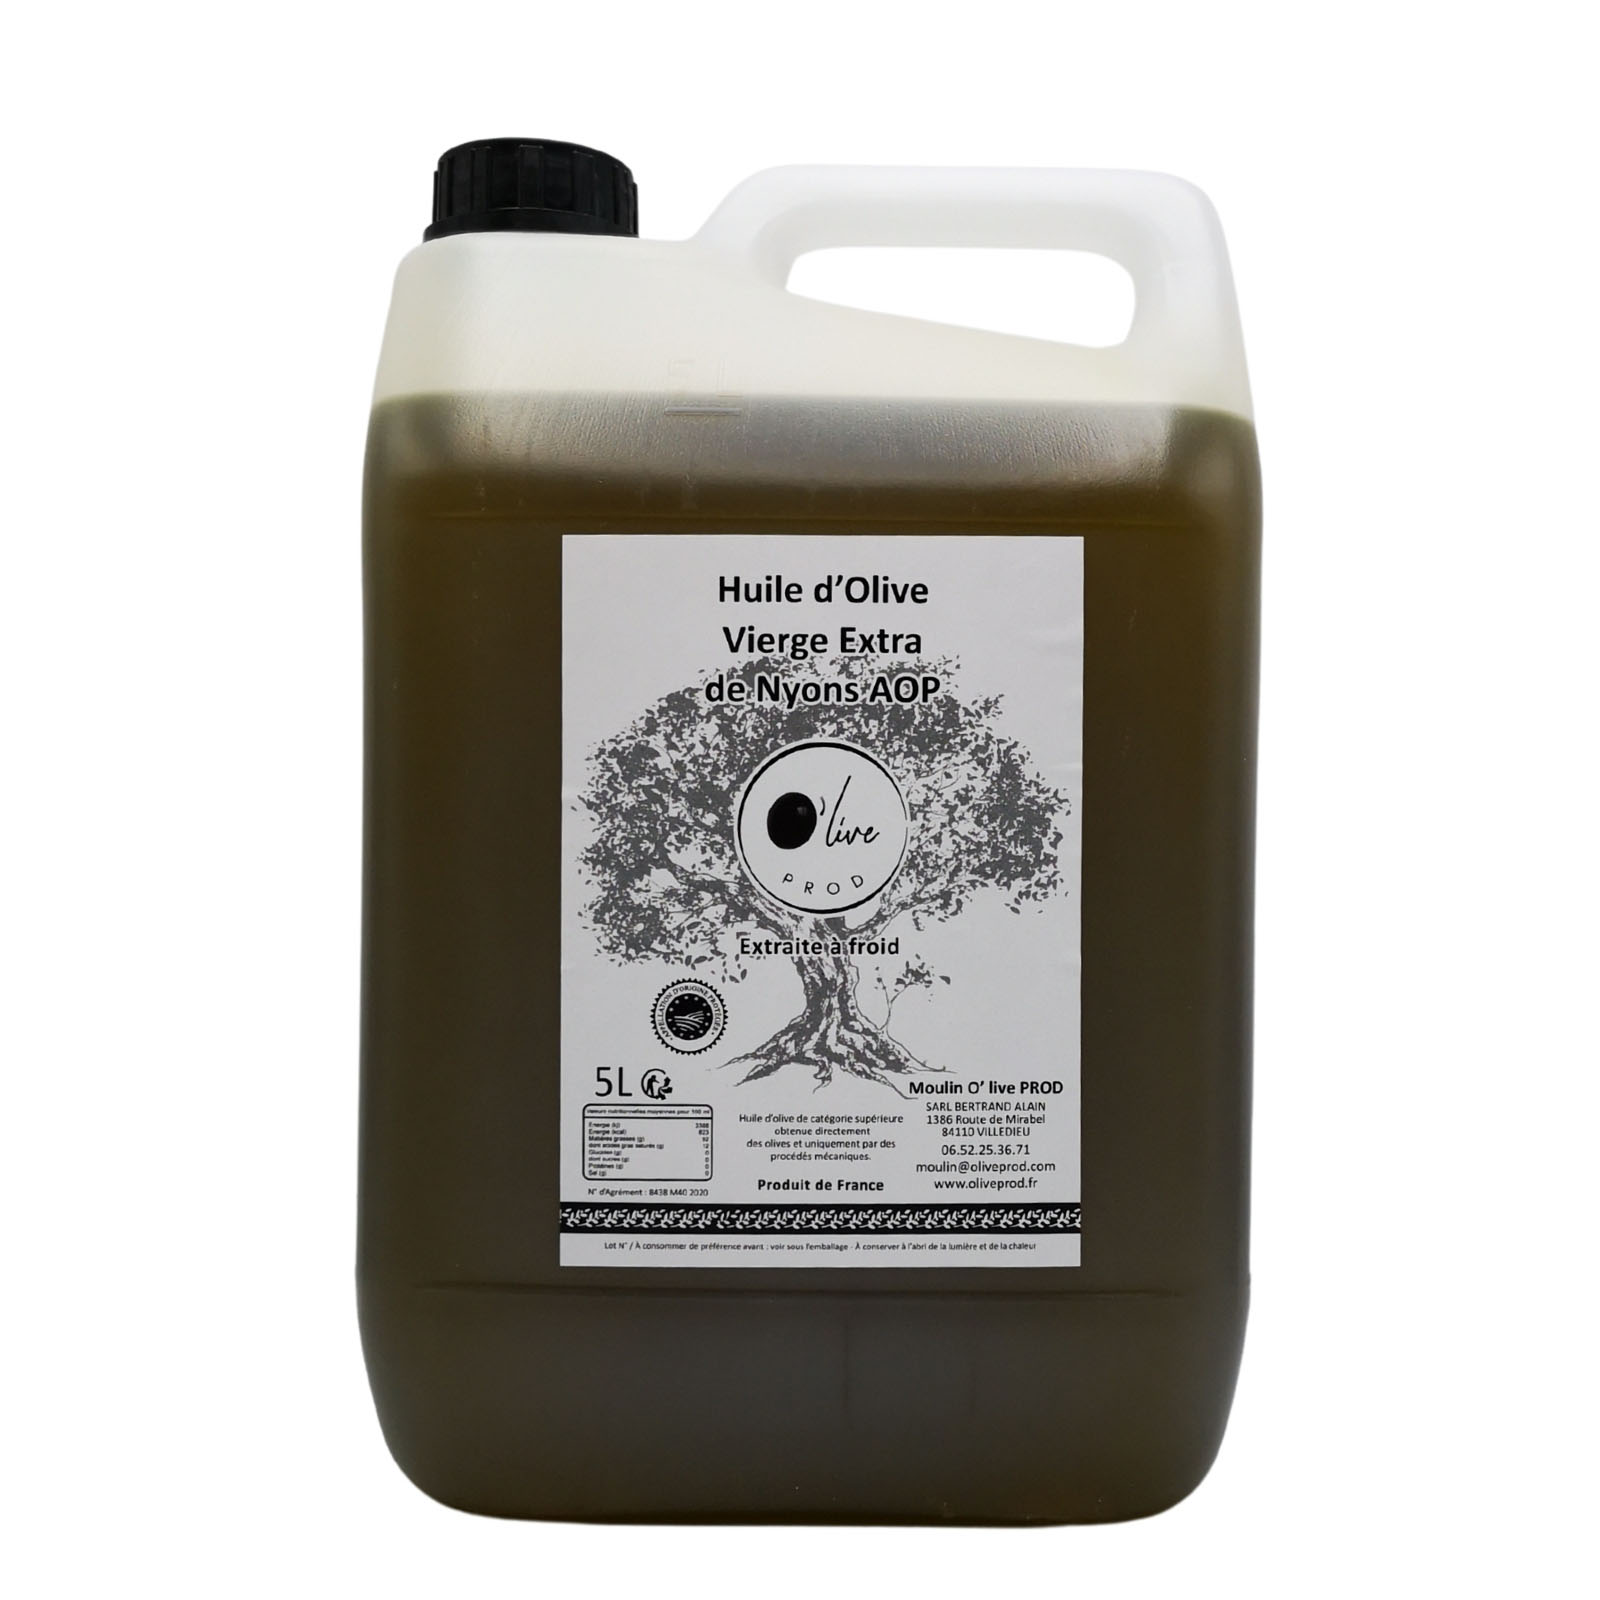 Huile d'olive de Nyons AOP - Bidon de 5 litres